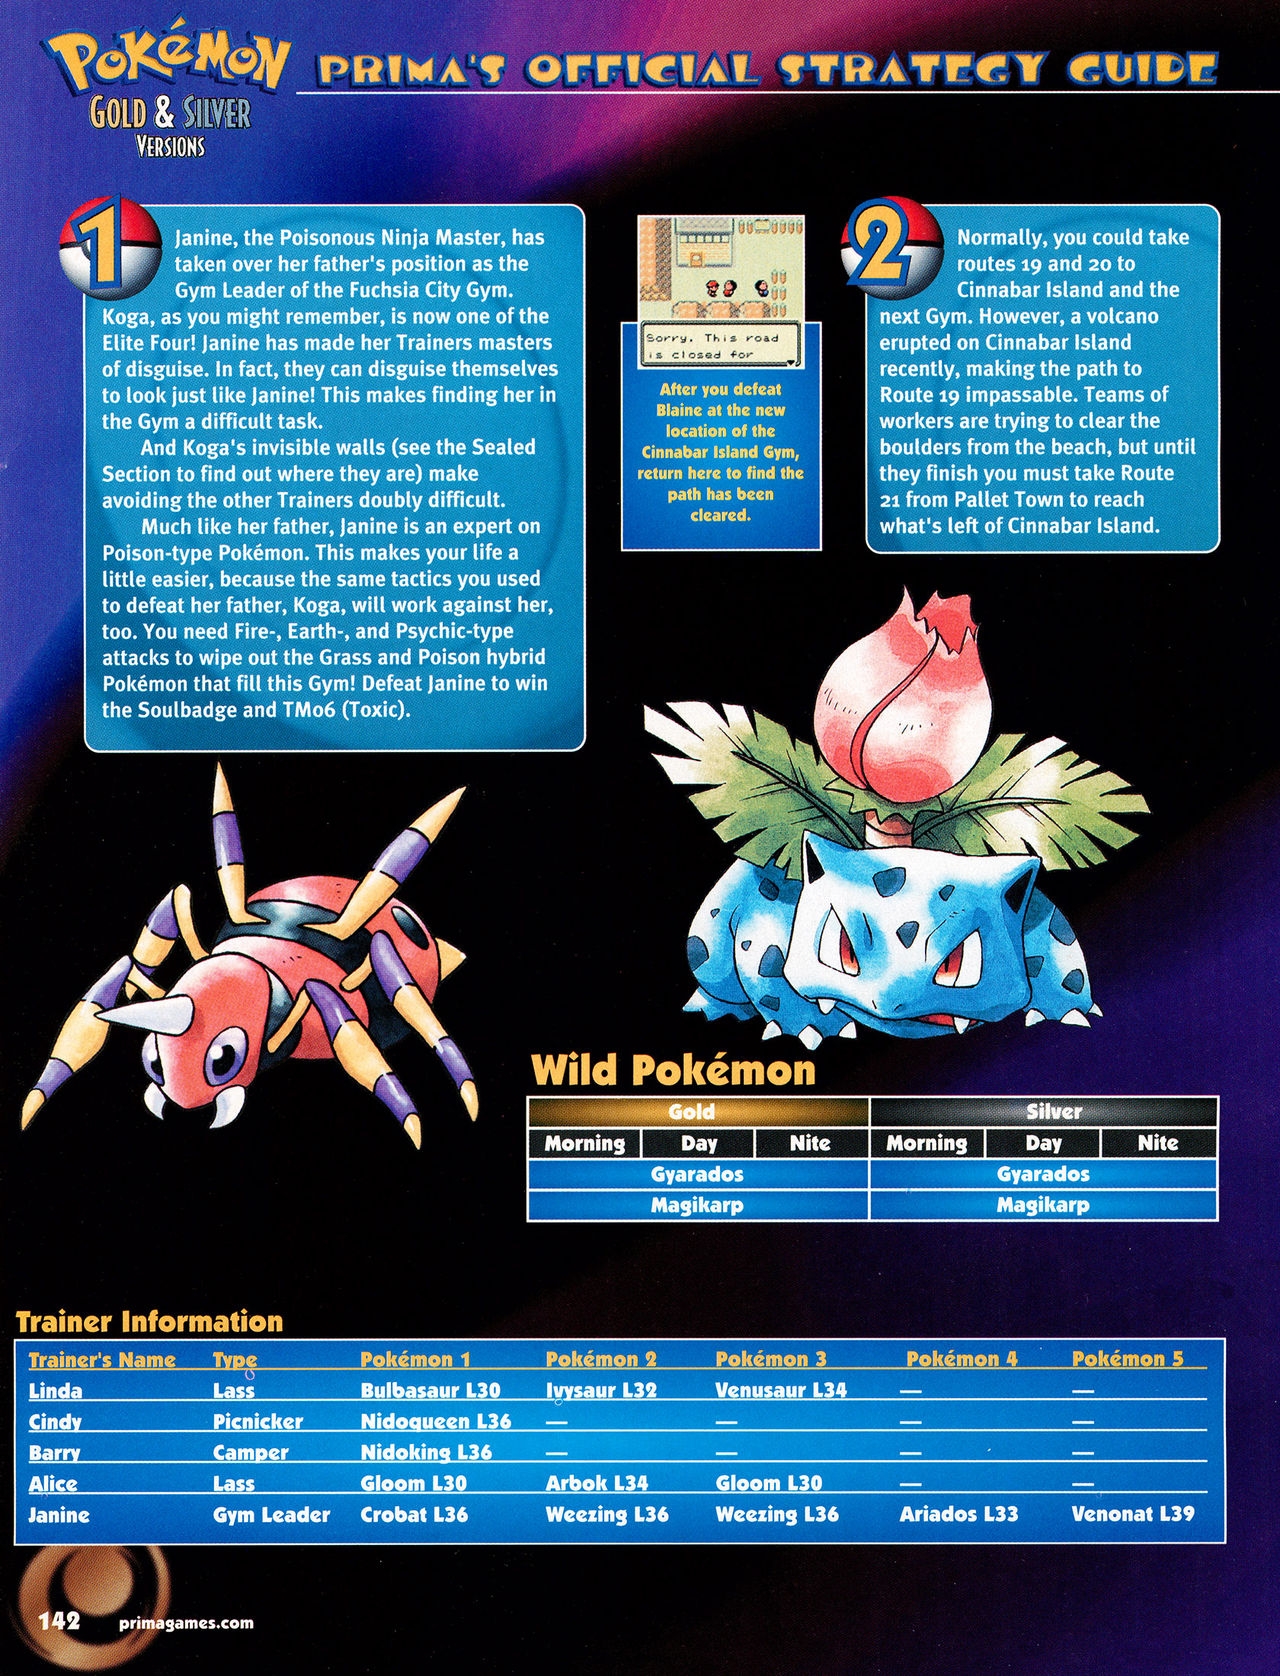 Pokémon Gold & Silver Versions - Strategy Guide 143